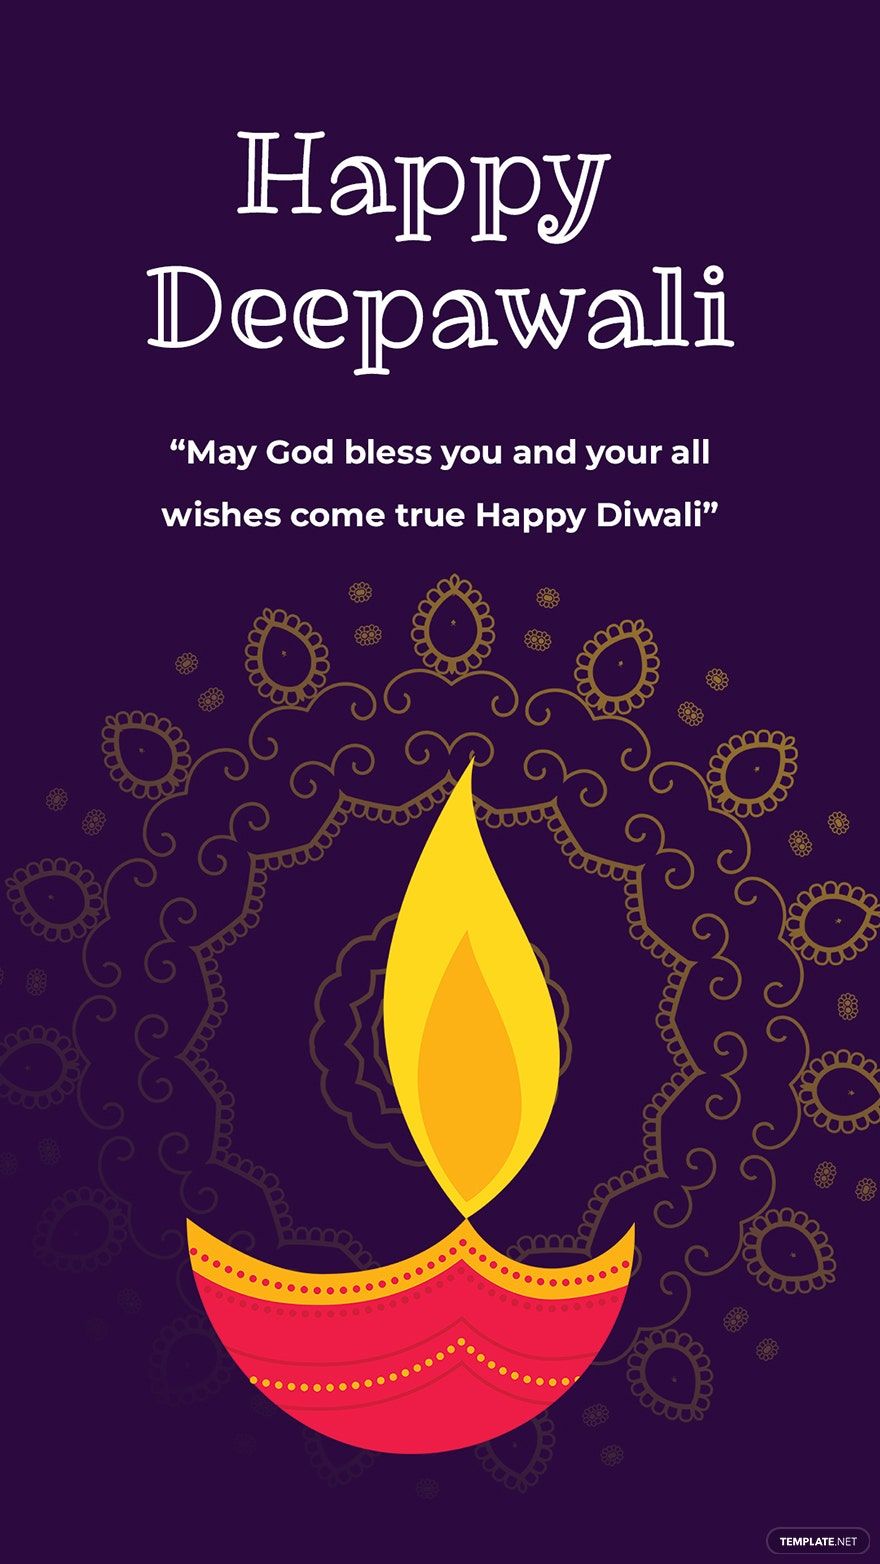 Happy Deepawali Whatsapp Image Template